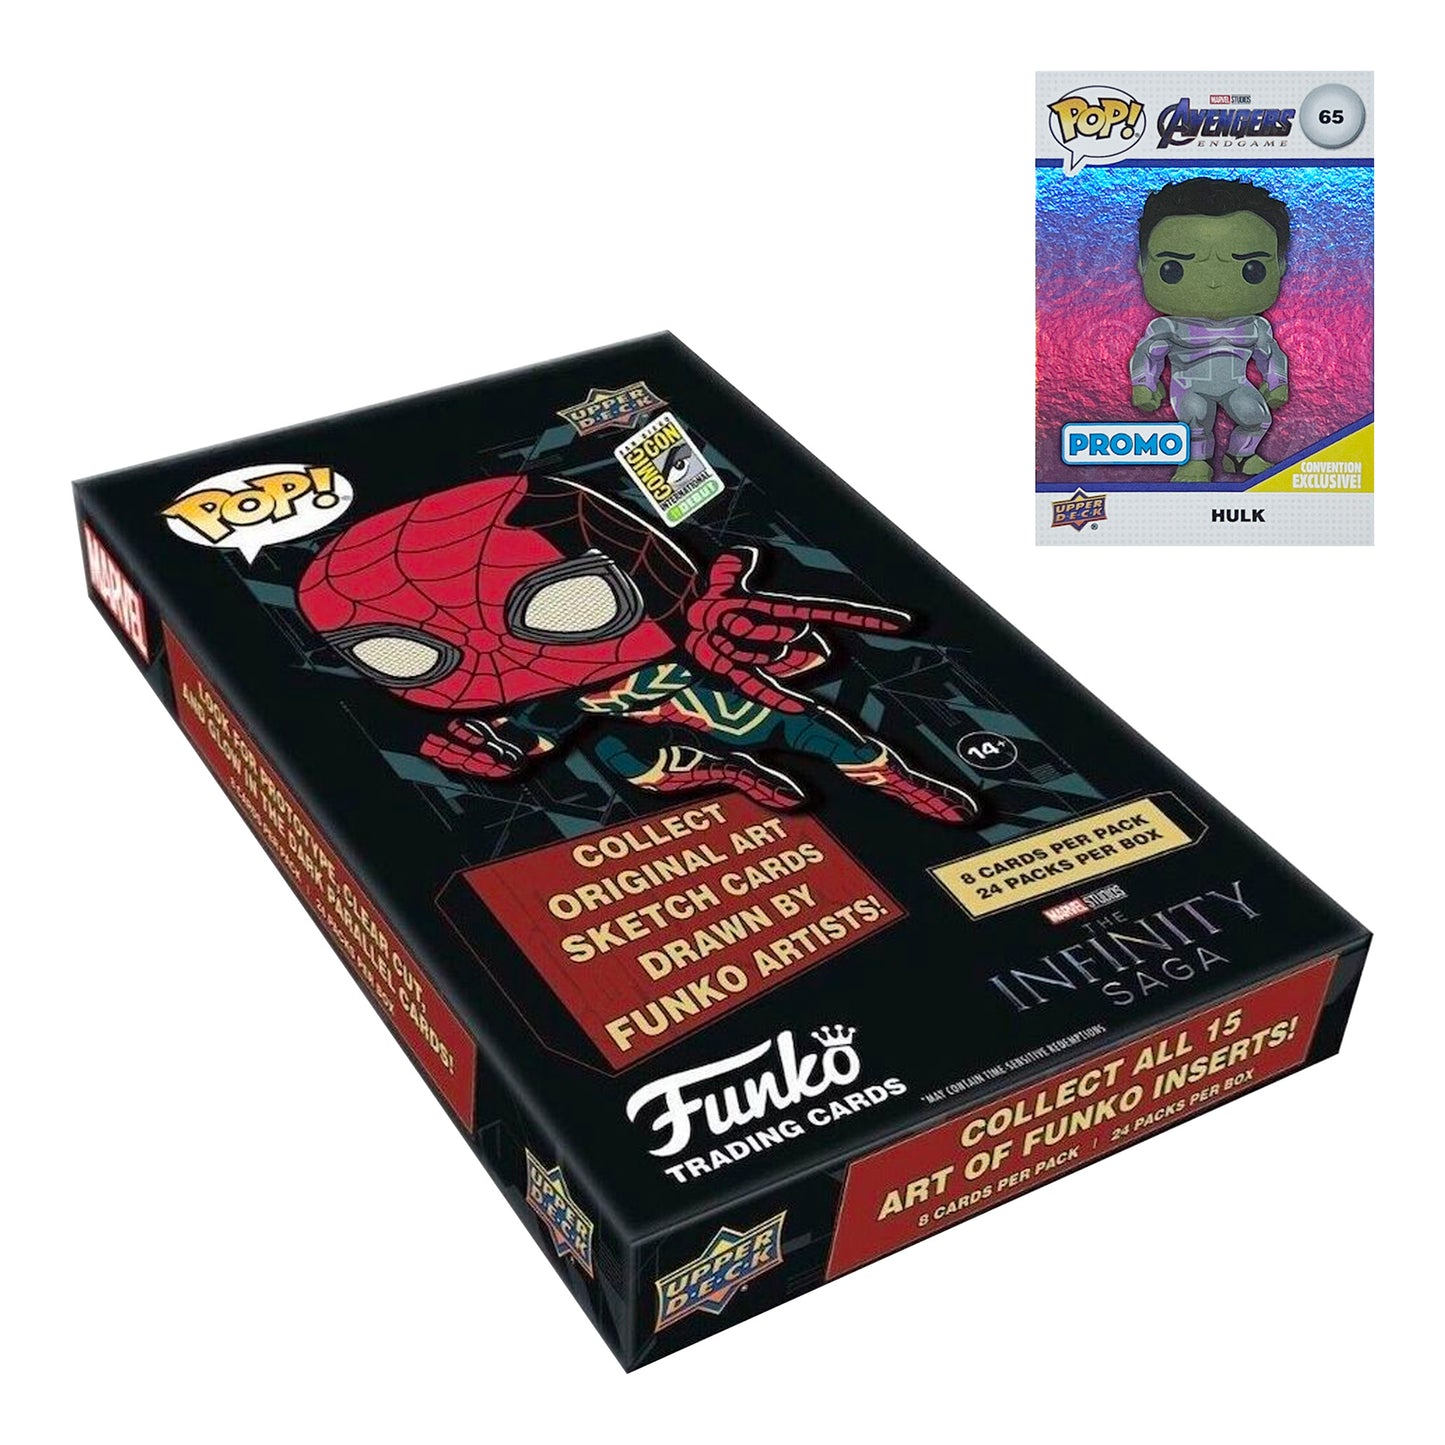 Funko Pop Upper Deck Marvel Trading Cards Box with Hulk Promo Card SDCC 2023 Debut Set